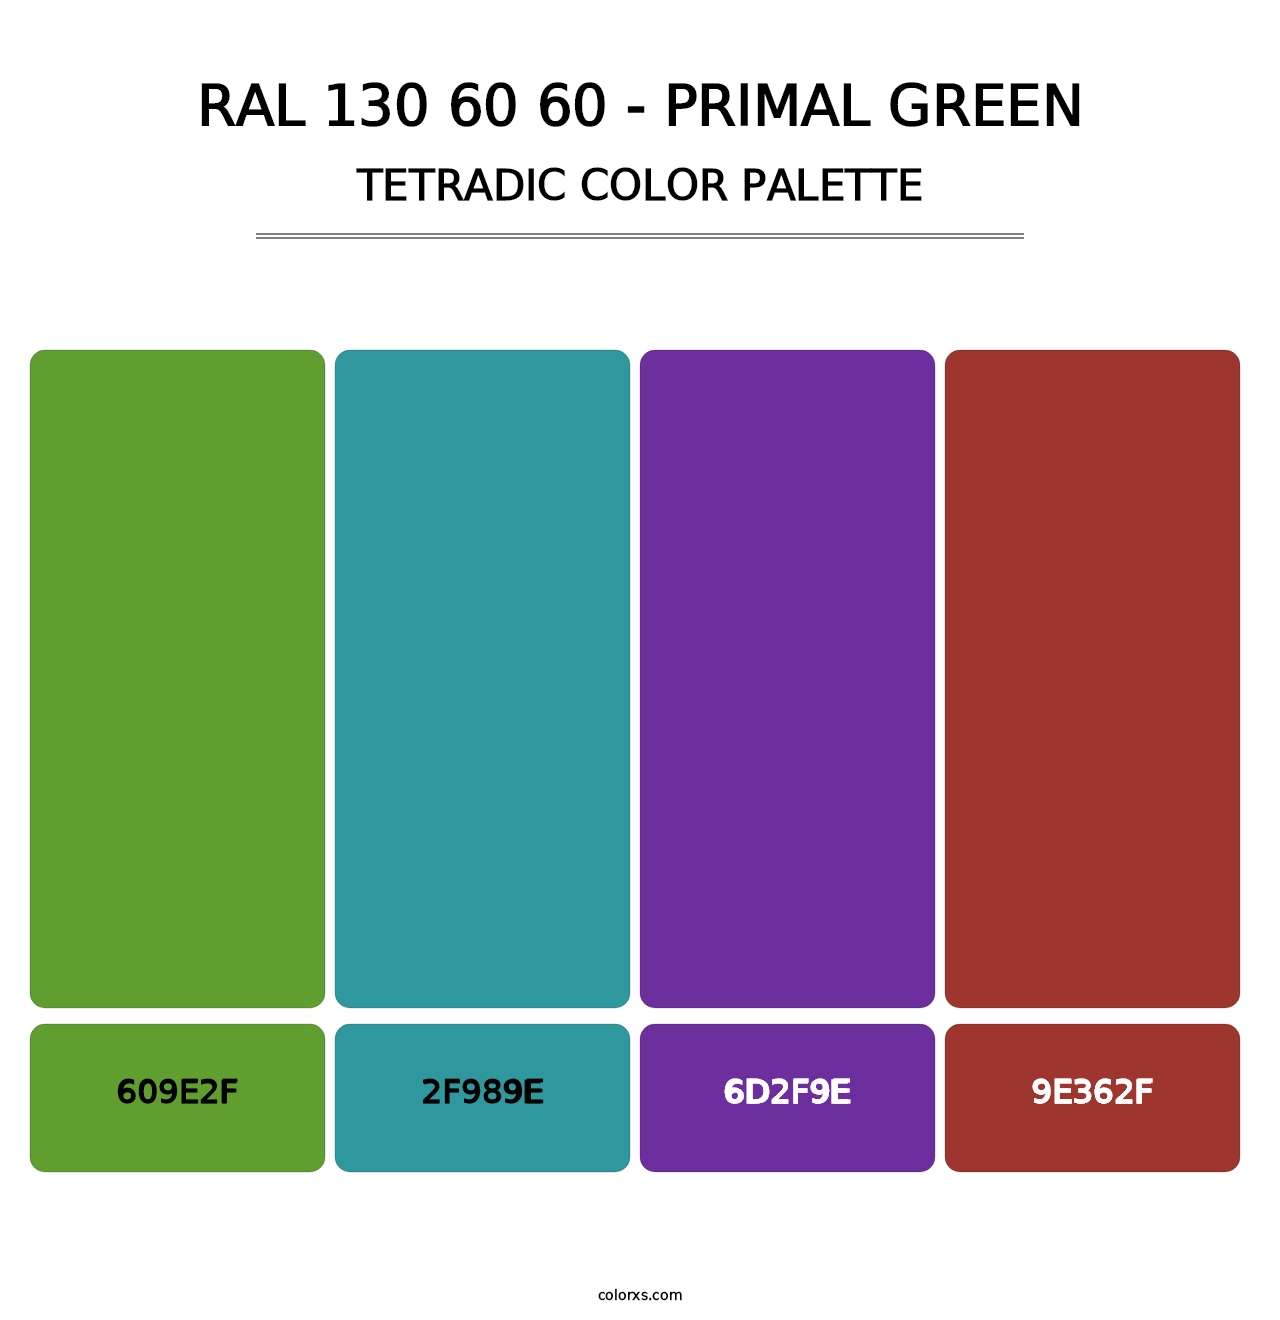 RAL 130 60 60 - Primal Green - Tetradic Color Palette